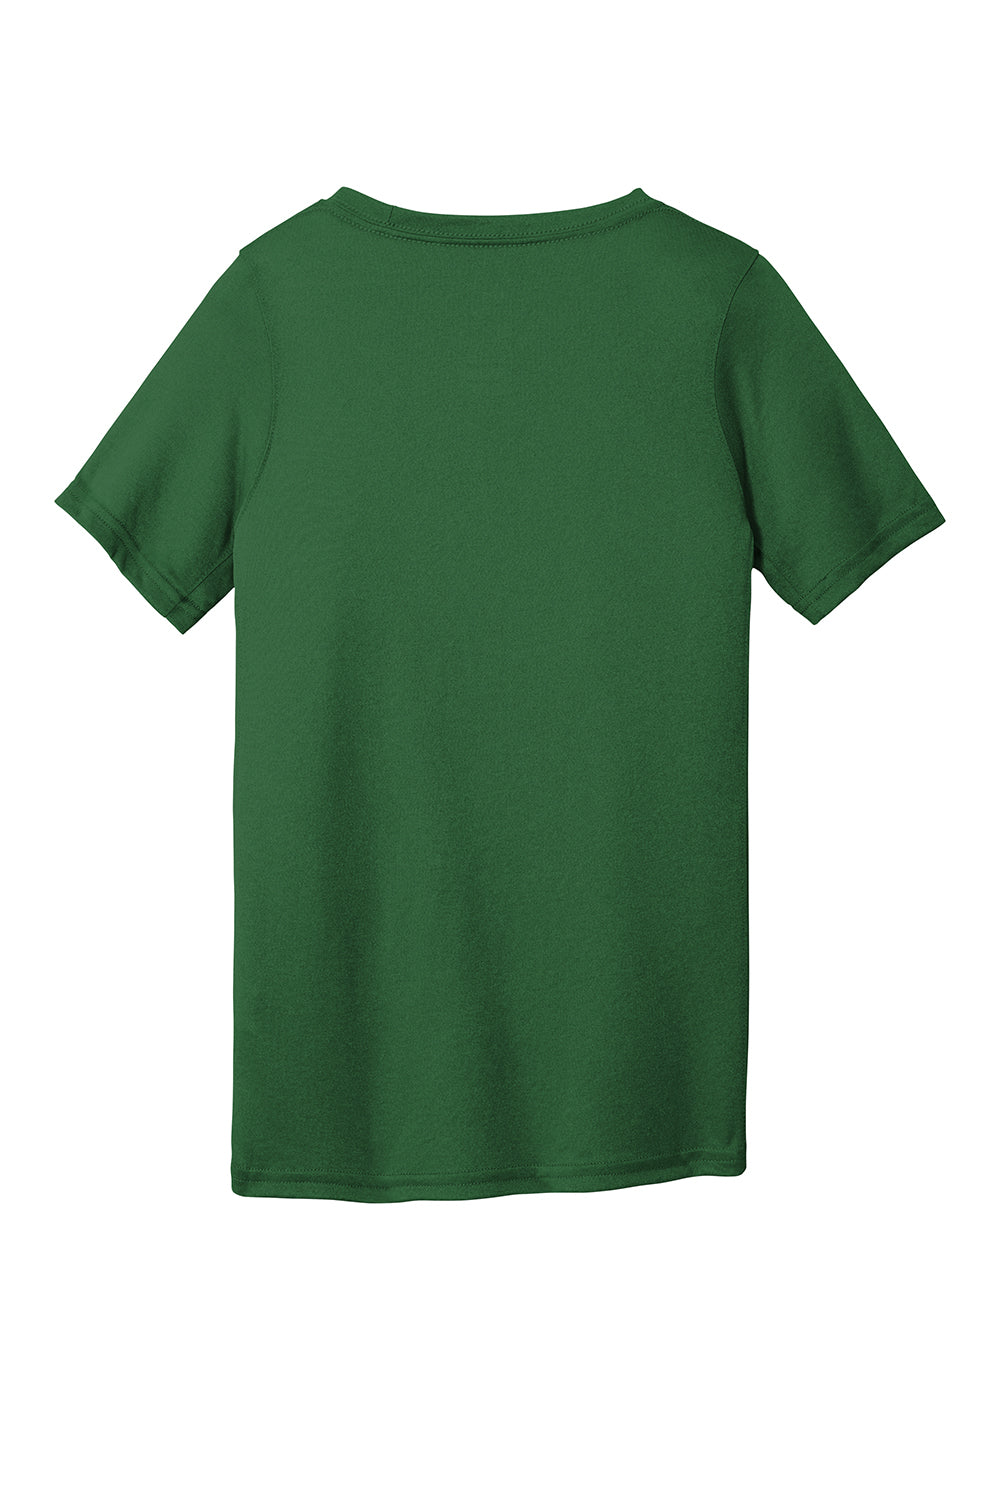 Nike DV7317 Youth Team rLegend Dri-Fit Moisure Wicking Short Sleeve Crewneck T-Shirt Gorge Green Flat Back